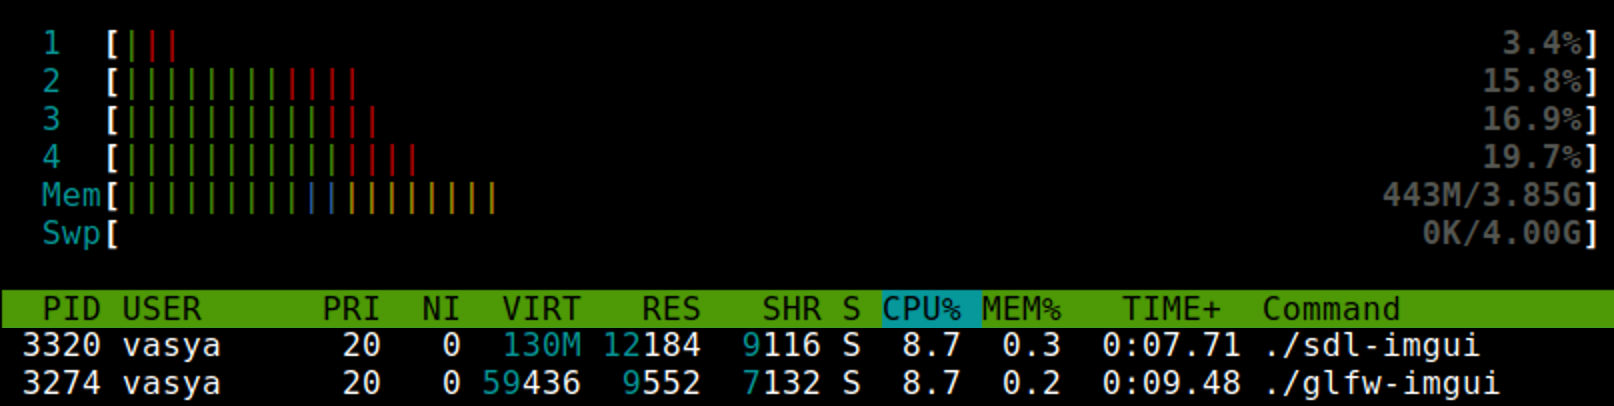 GLFW vs SDL, CPU and memory usage on Linux